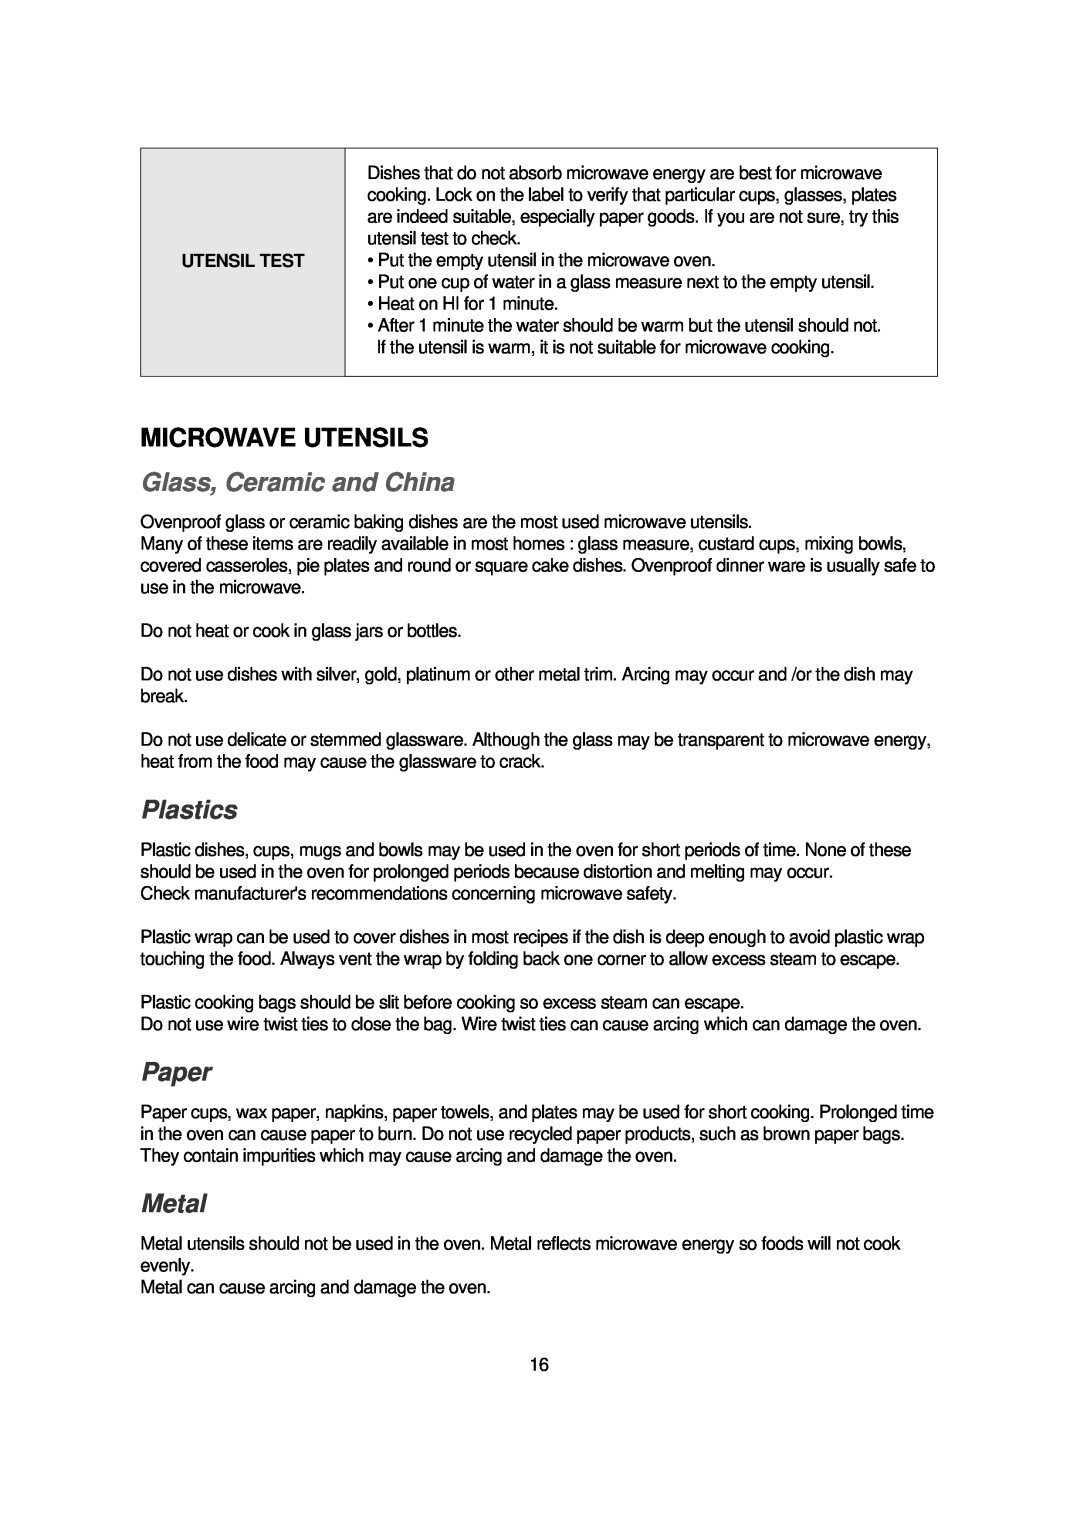 Magic Chef MCB1110B instruction manual Microwave Utensils, Utensil Test, Glass, Ceramic and China, Plastics, Paper, Metal 